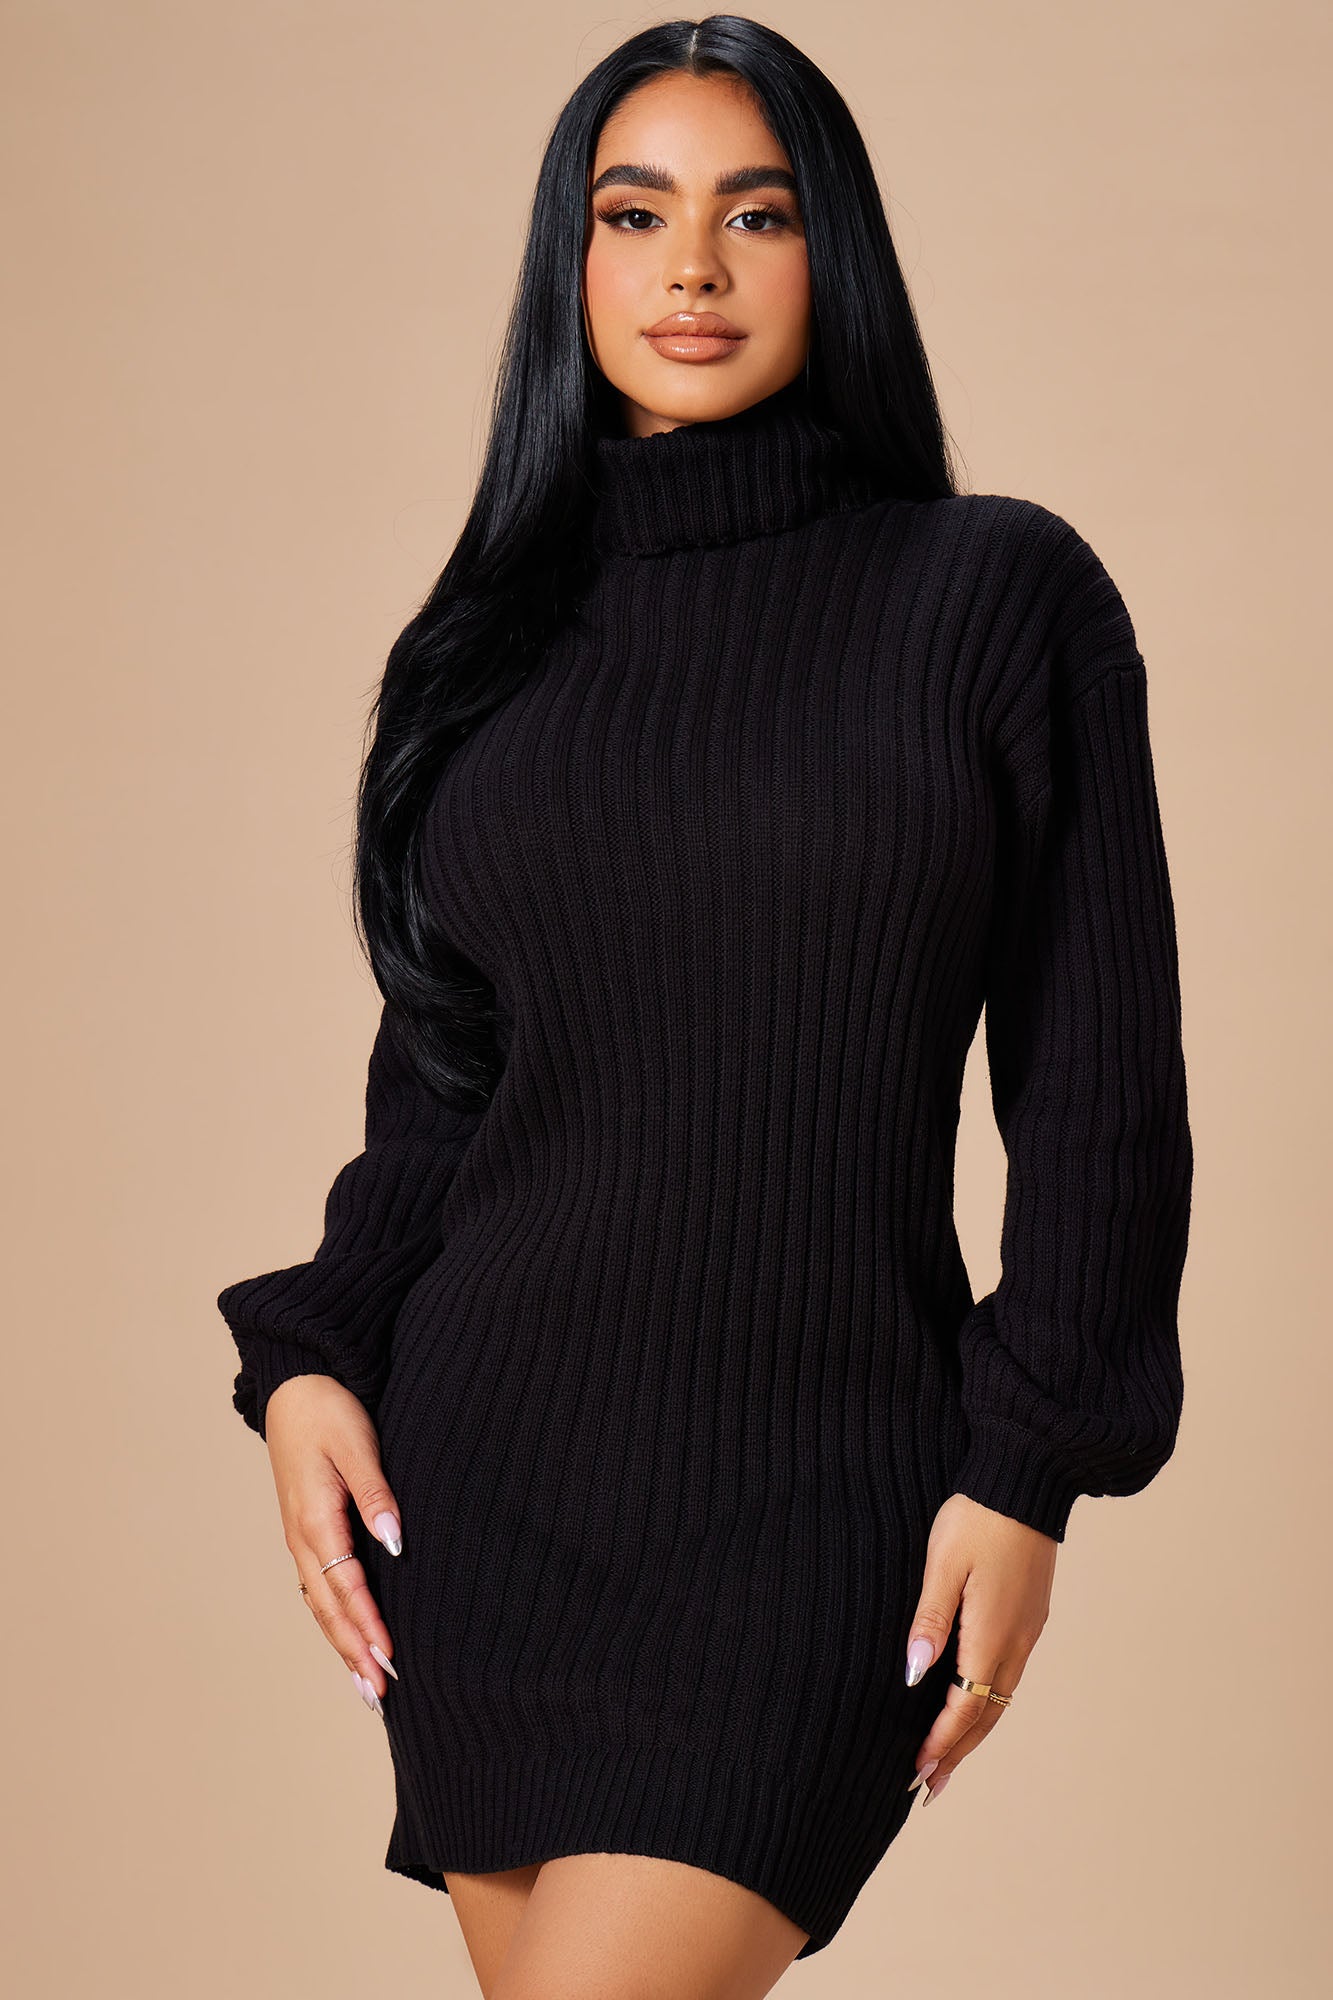 Too Cozy Turtle Neck Sweater Dress - Black, Fashion Nova, Dresses